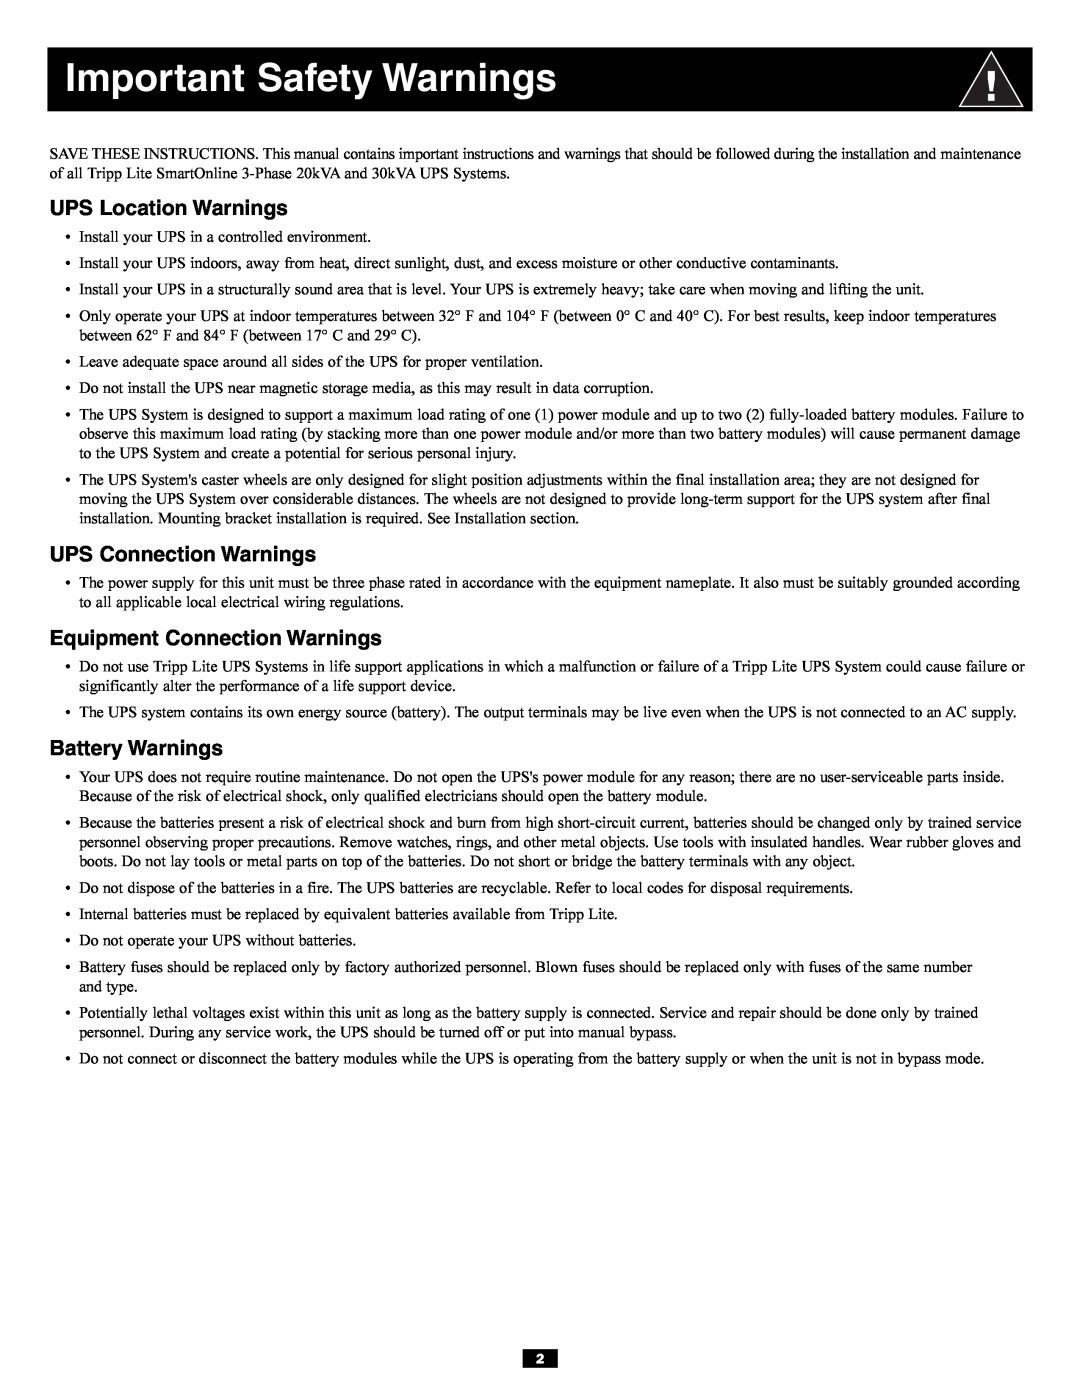 Tripp Lite 3-Phase 30kVA Important Safety Warnings, UPS Location Warnings, UPS Connection Warnings, Battery Warnings 